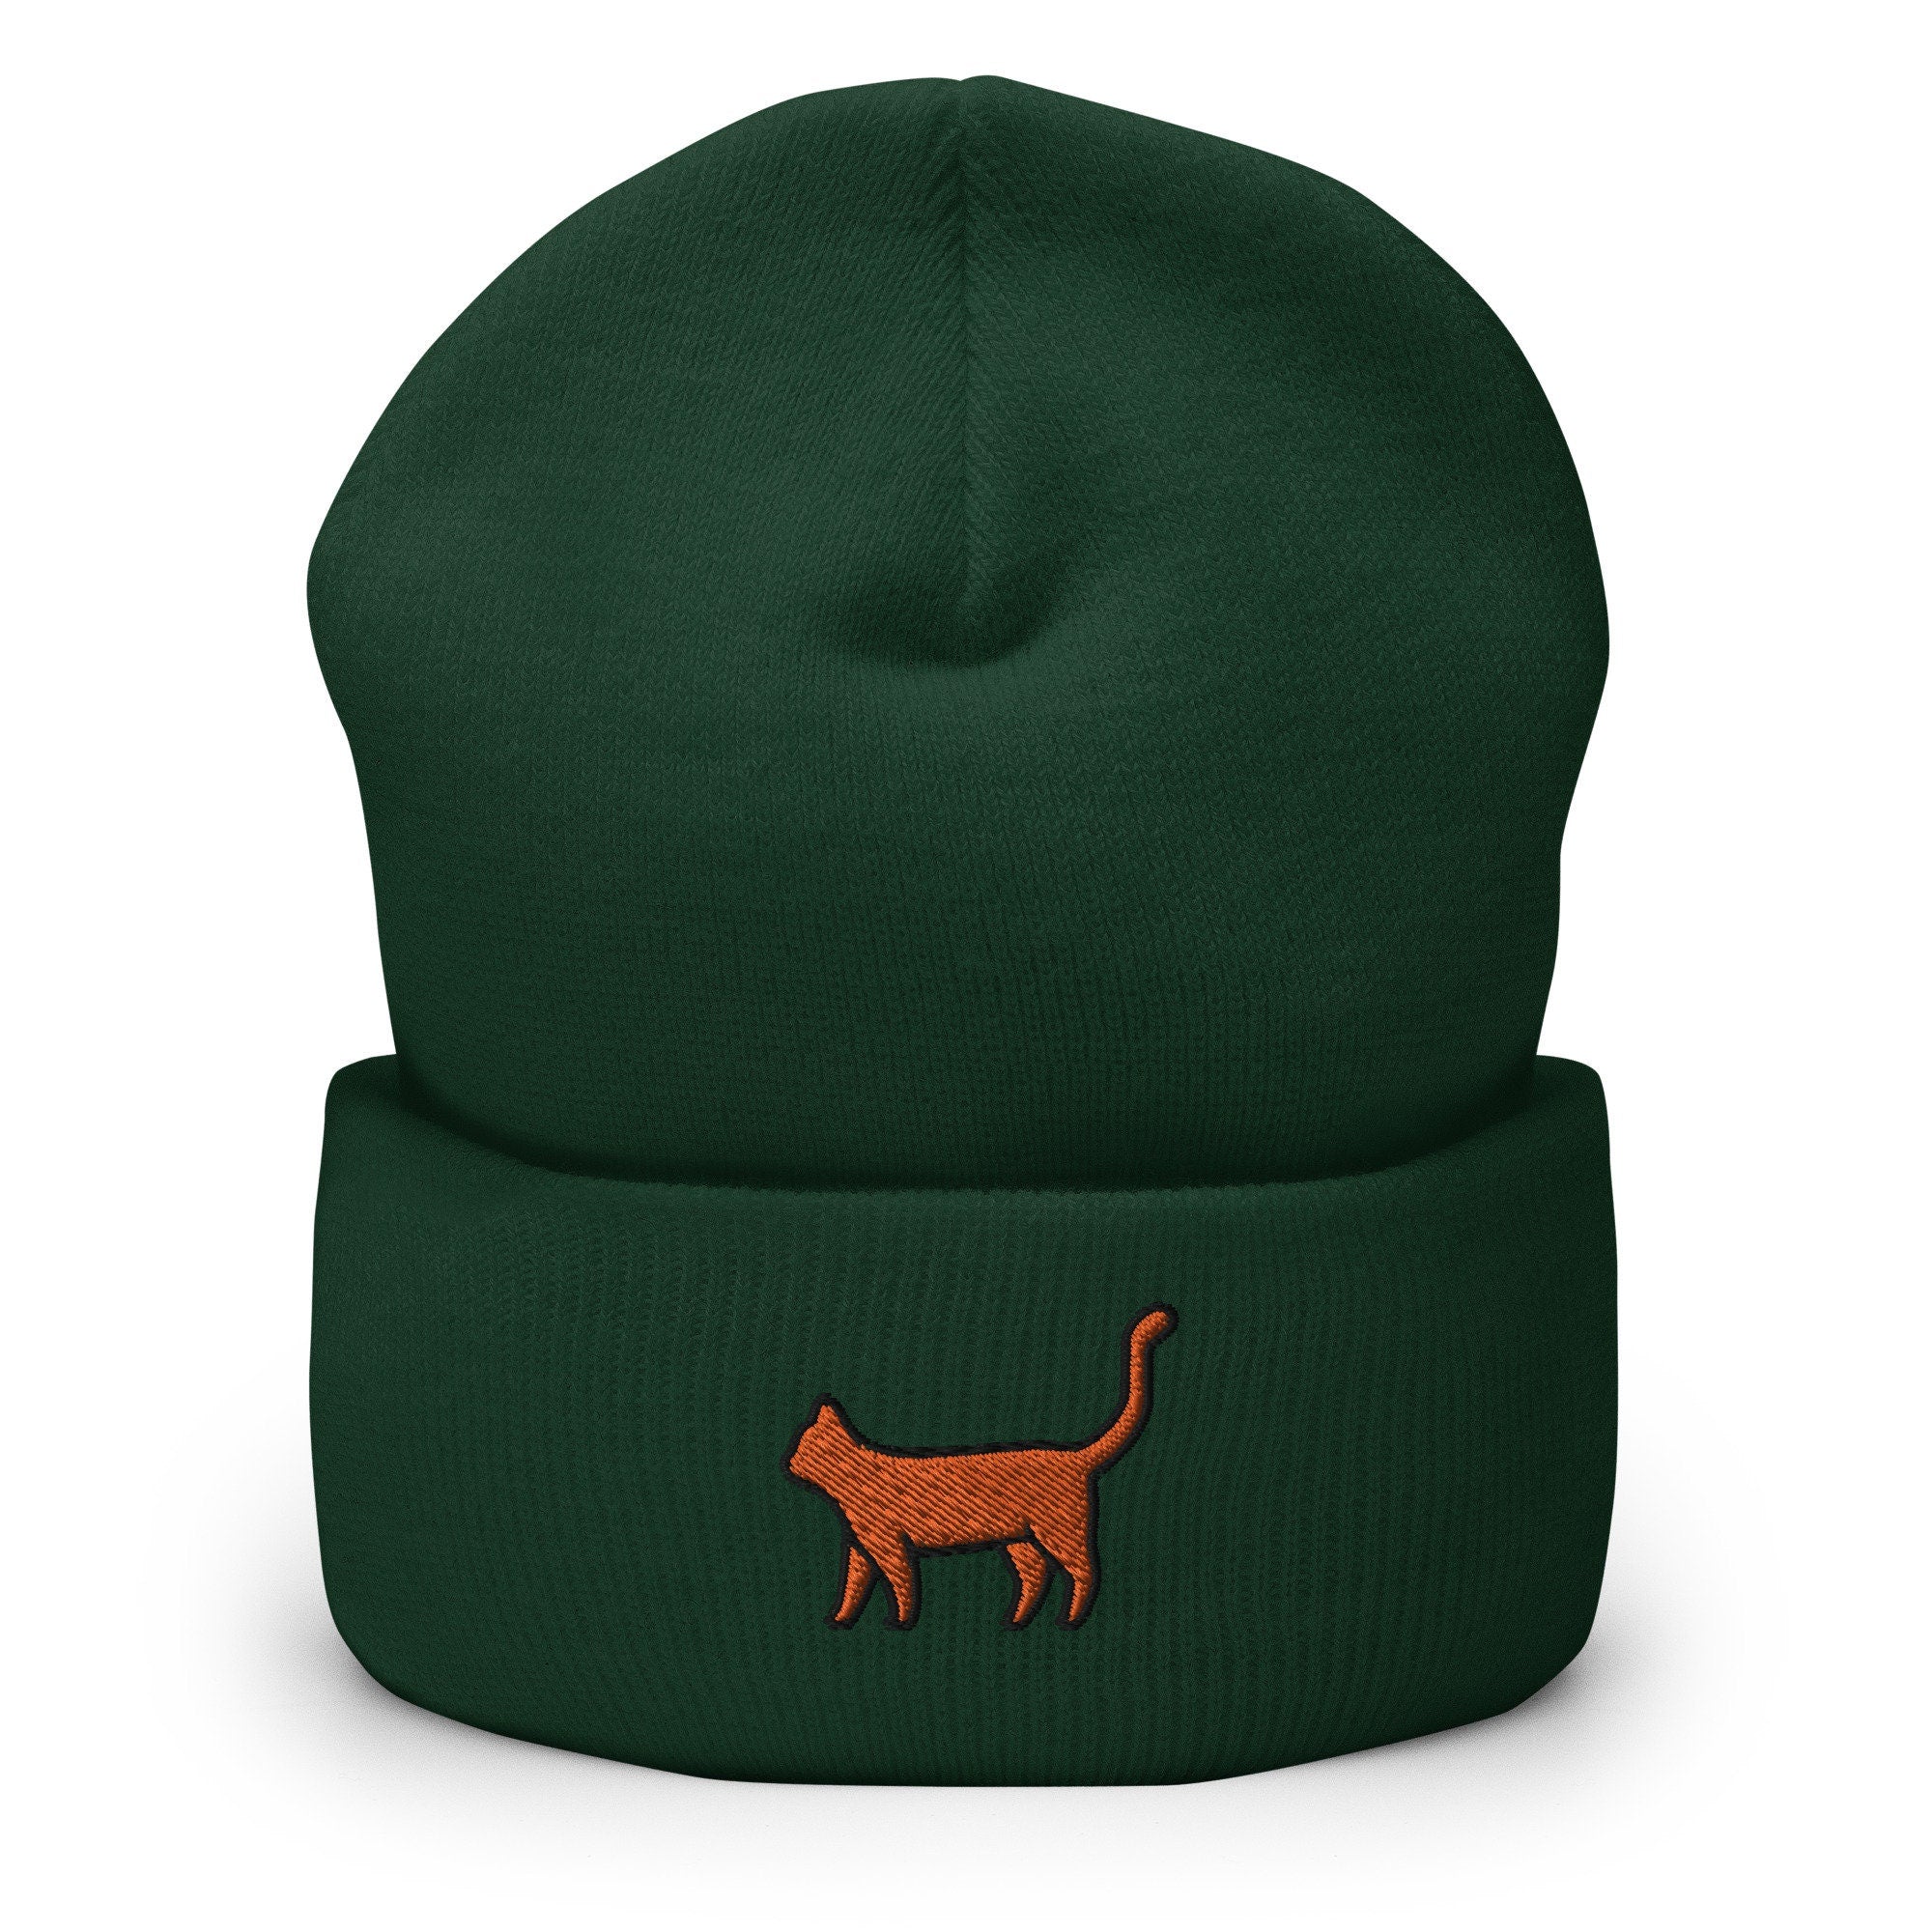 Orange Tabby Cat Lover Gift, Orange Cat Kitty Kitten Embroidered Beanie, Handmade Cuffed Knit Unisex Slouchy Adult Winter Hat Cap Gift